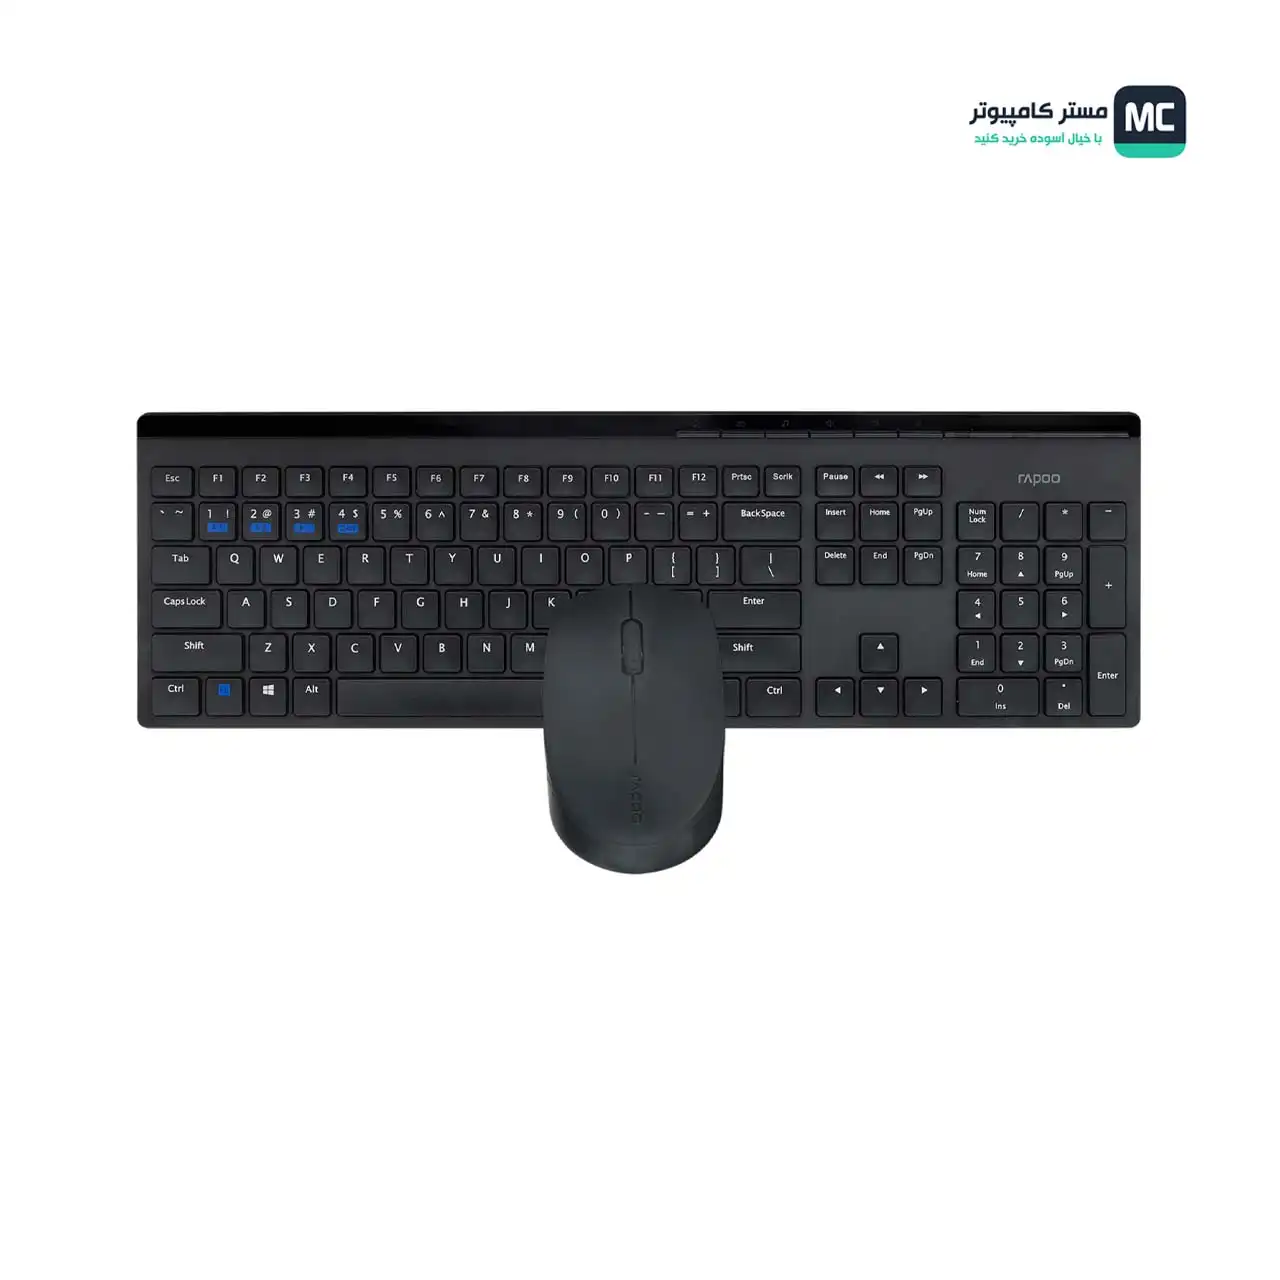 Rapoo 8110m Wireless Mouse & Keyboard Main Photo